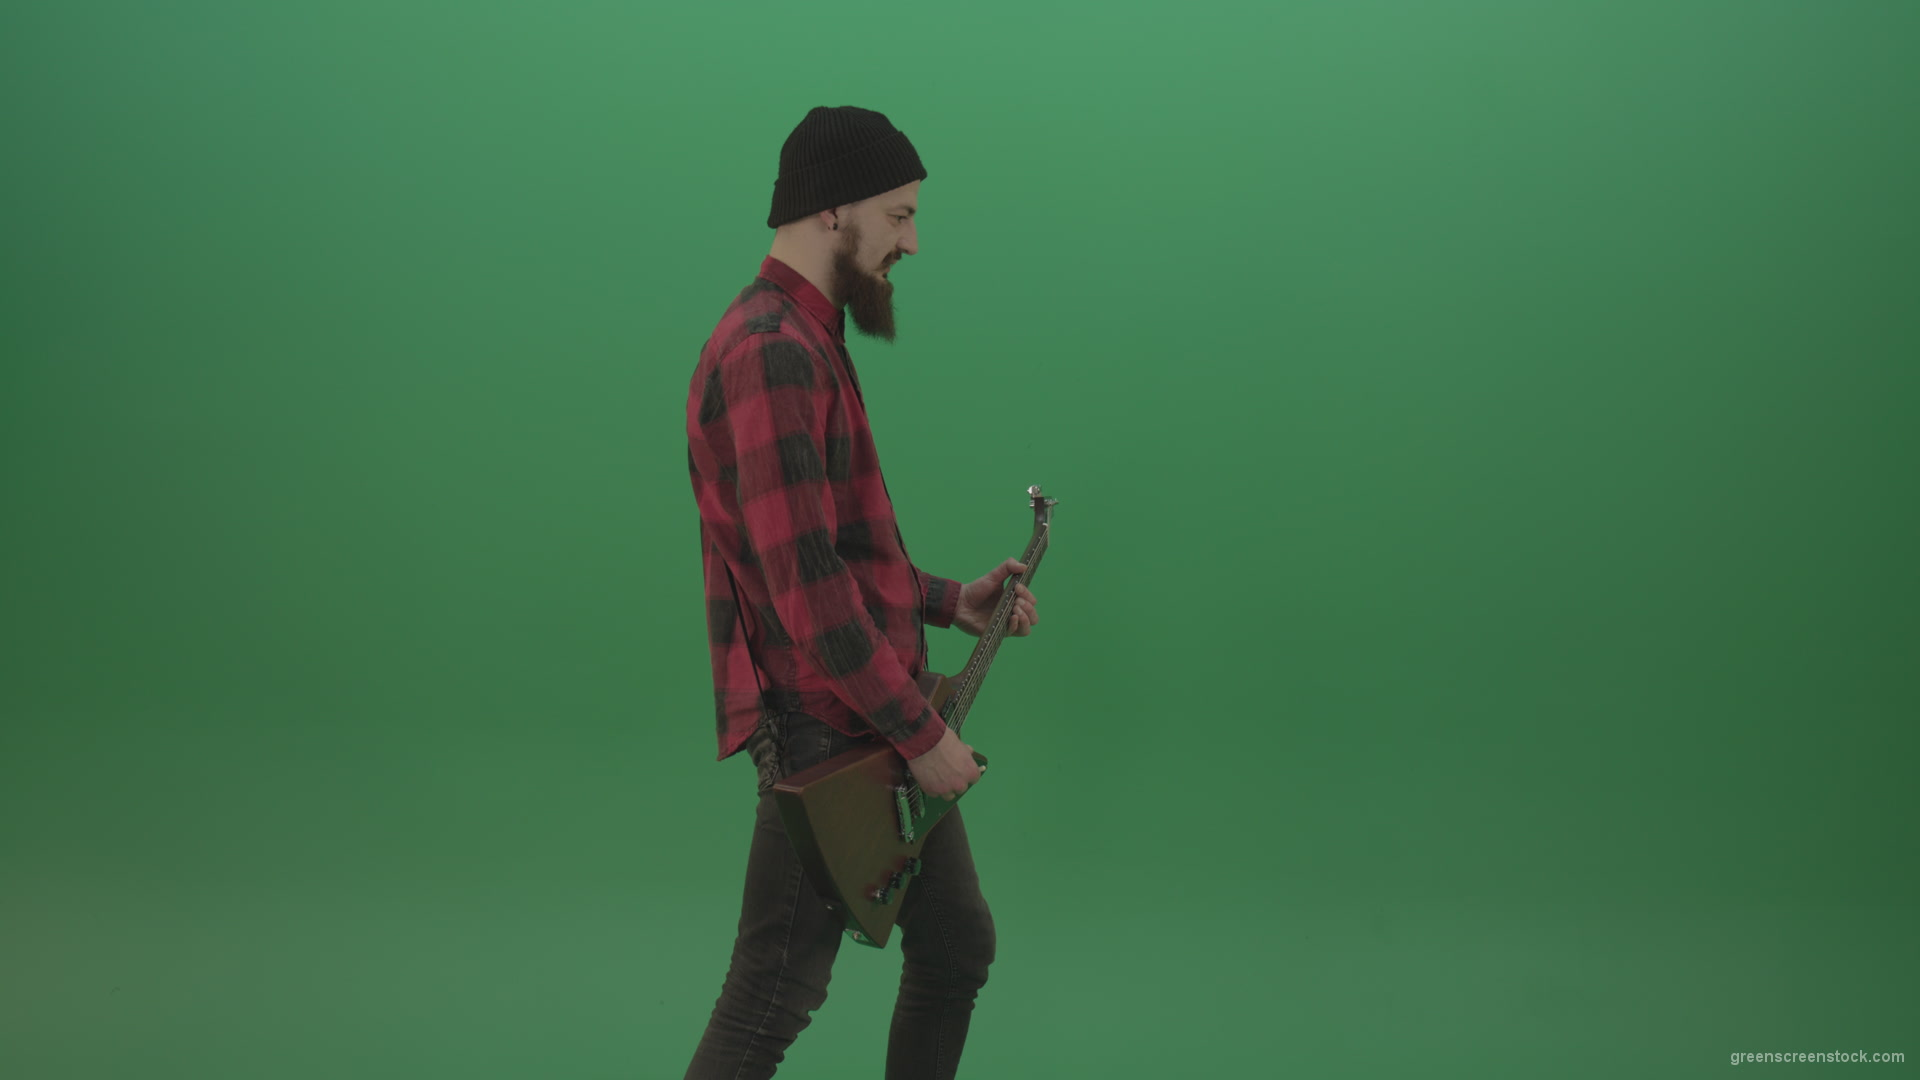 Man-punk-hardrock-guitarist-playing-guitar-in-side-view-in-green-screen-studio_001 Green Screen Stock